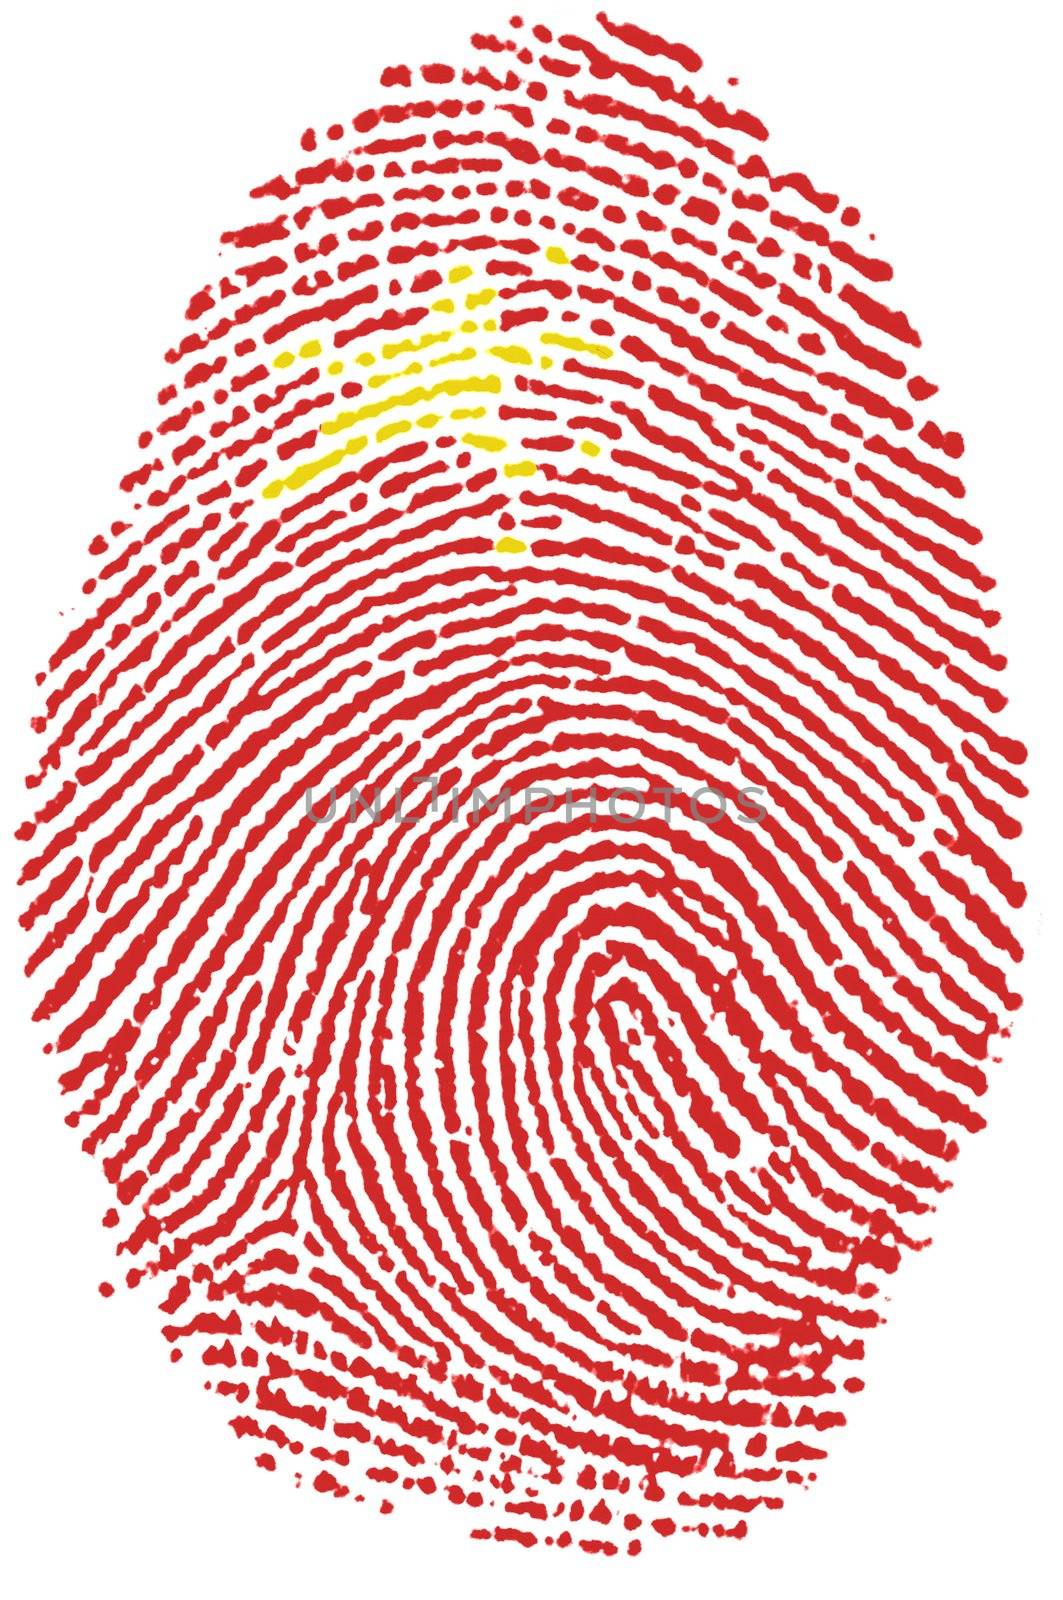 Fingerprint - China by rigamondis